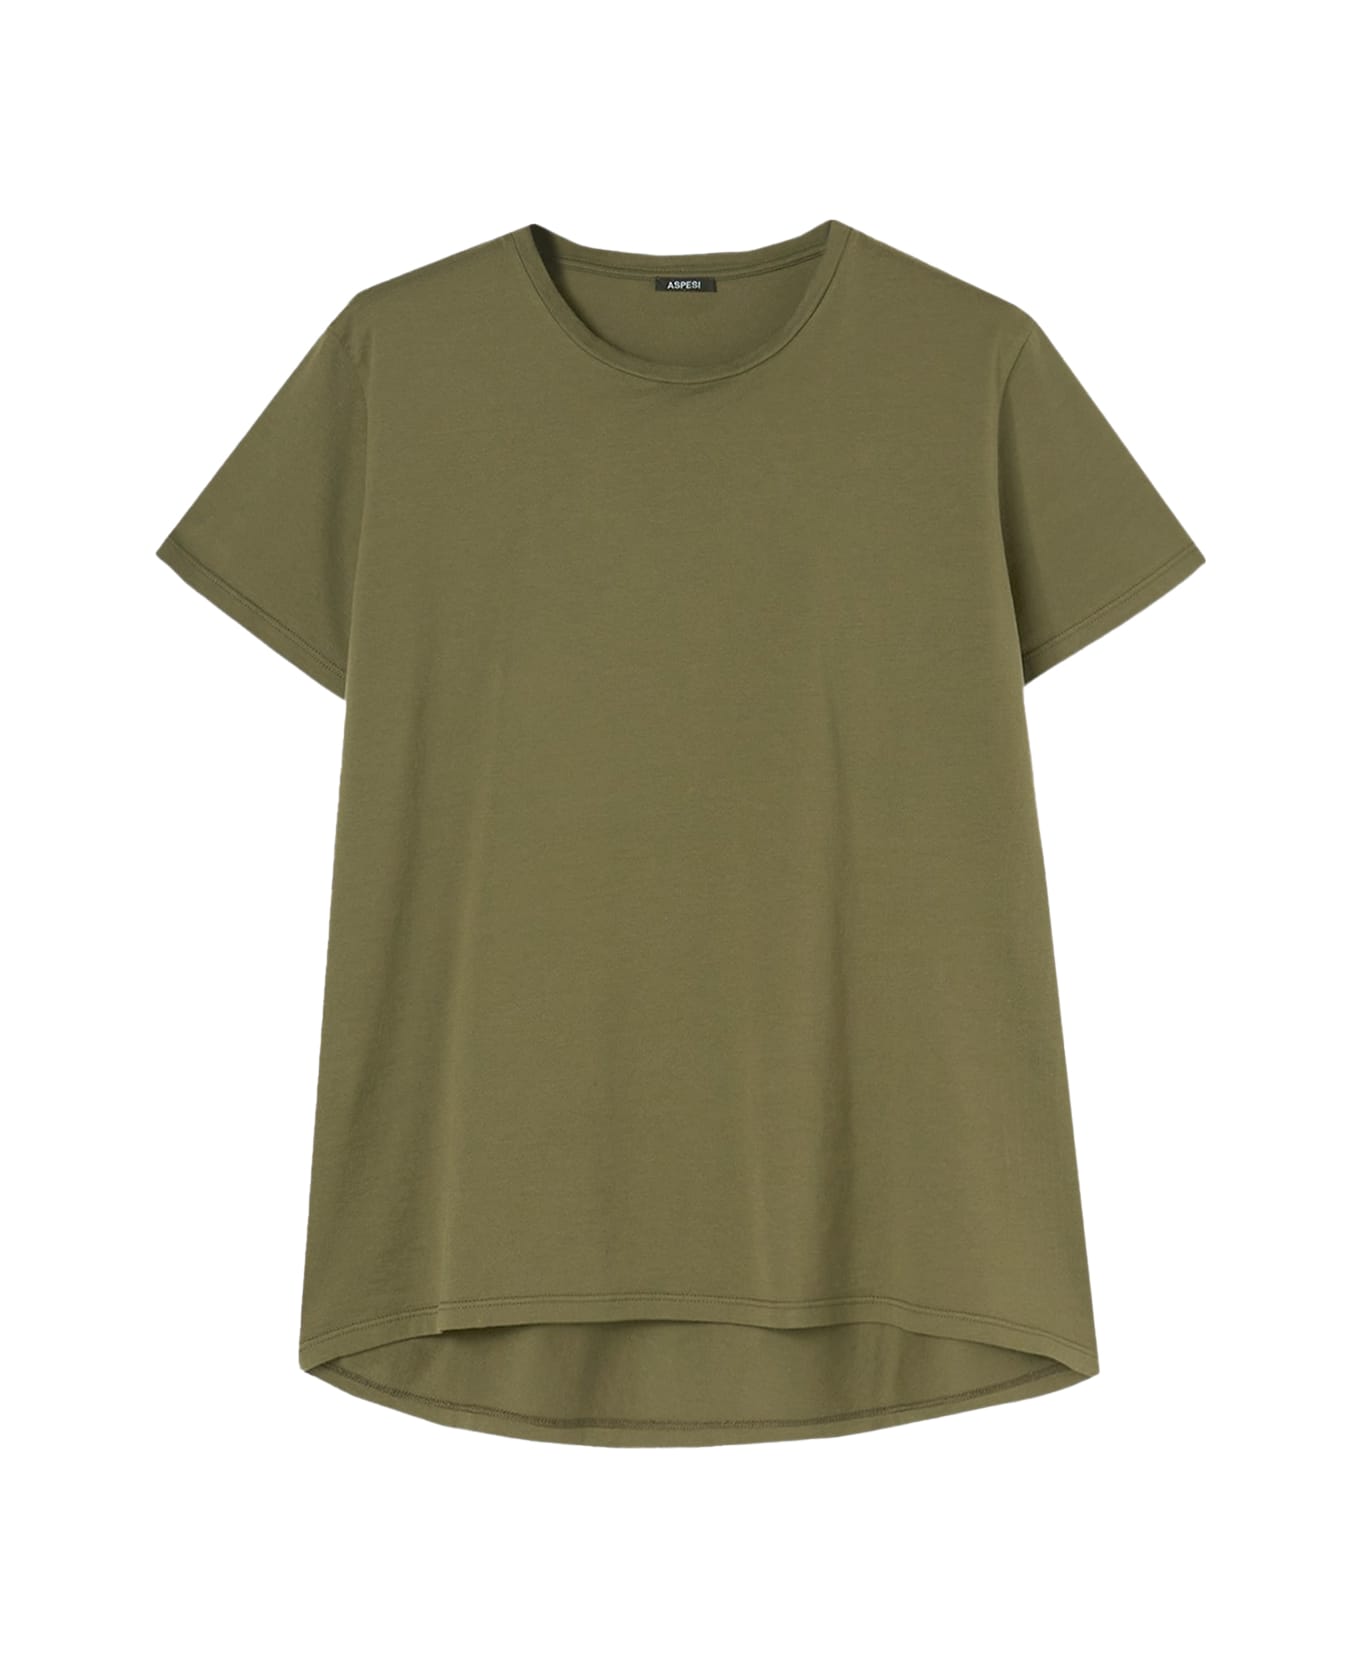 Aspesi Military Green T-shirt - Militare Tシャツ